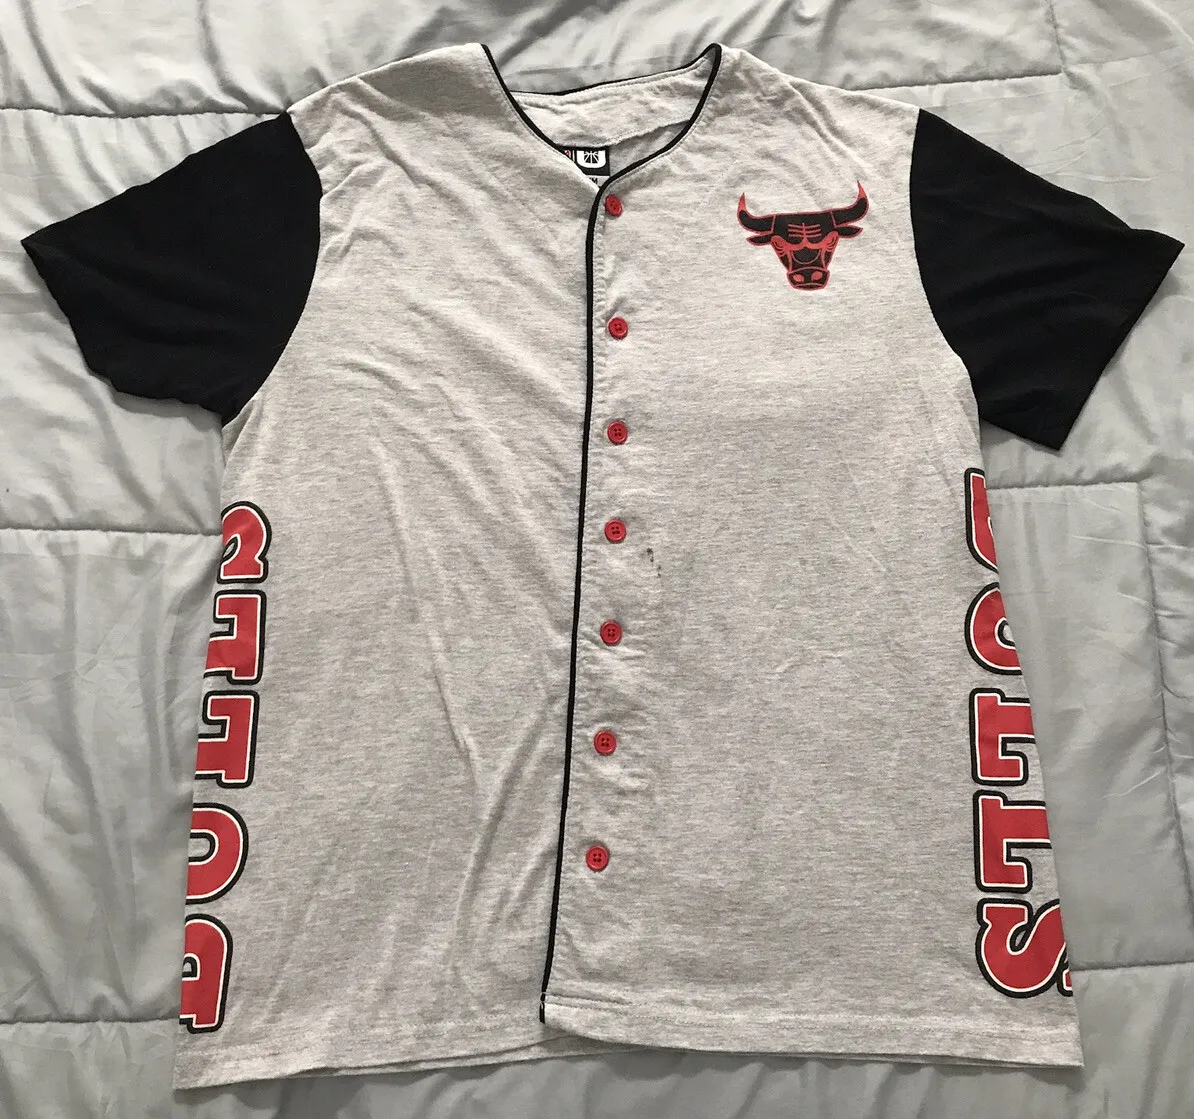 chicago bulls button down shirt